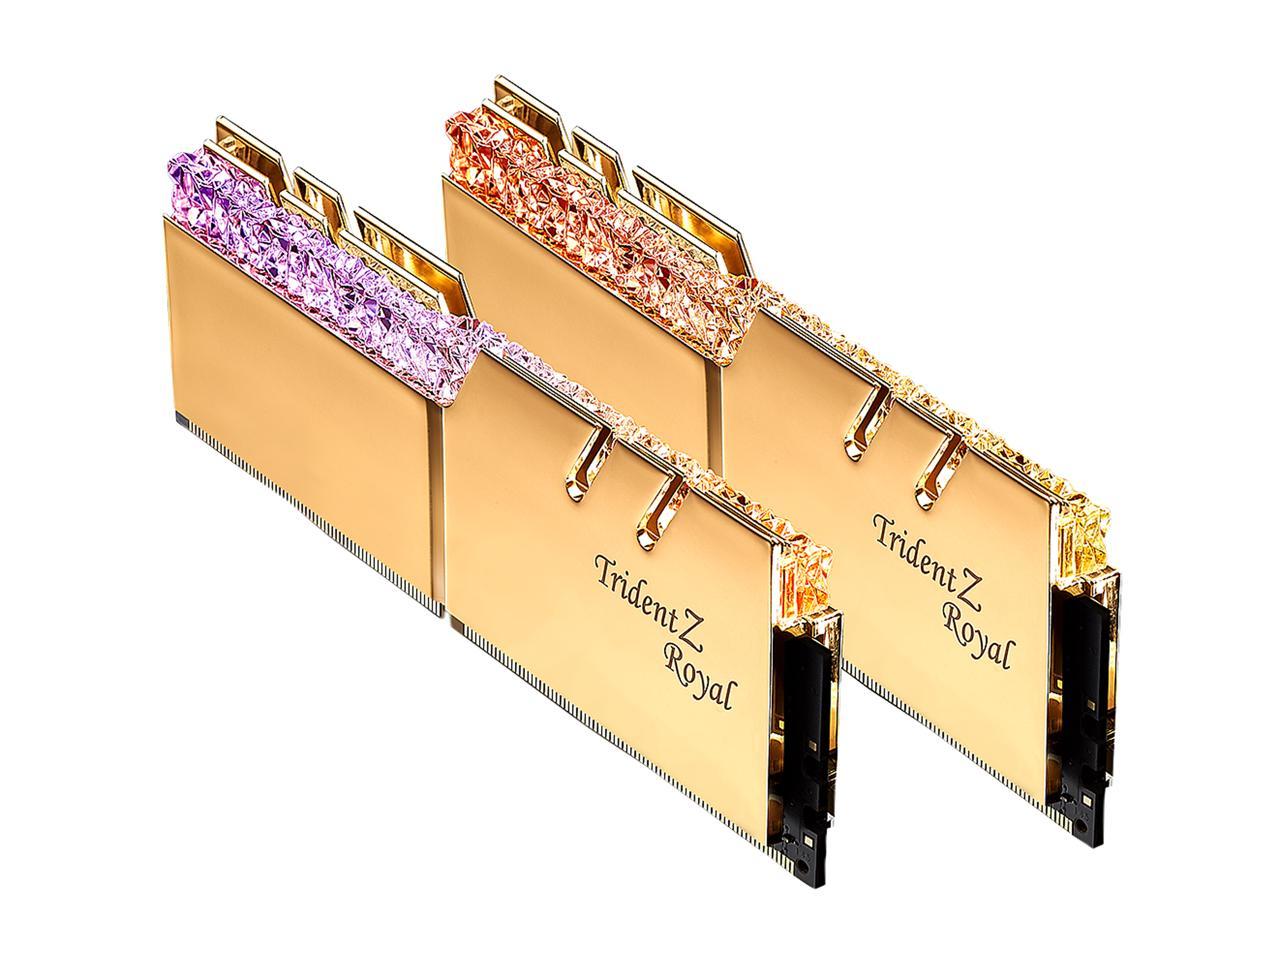 G.SKILL Trident Z Royal Series 64GB (2 x 32GB) 288-Pin DDR4 SDRAM DDR4 2666 (PC4 21300) Desktop Memory Model F4-2666C18D-64GTRG